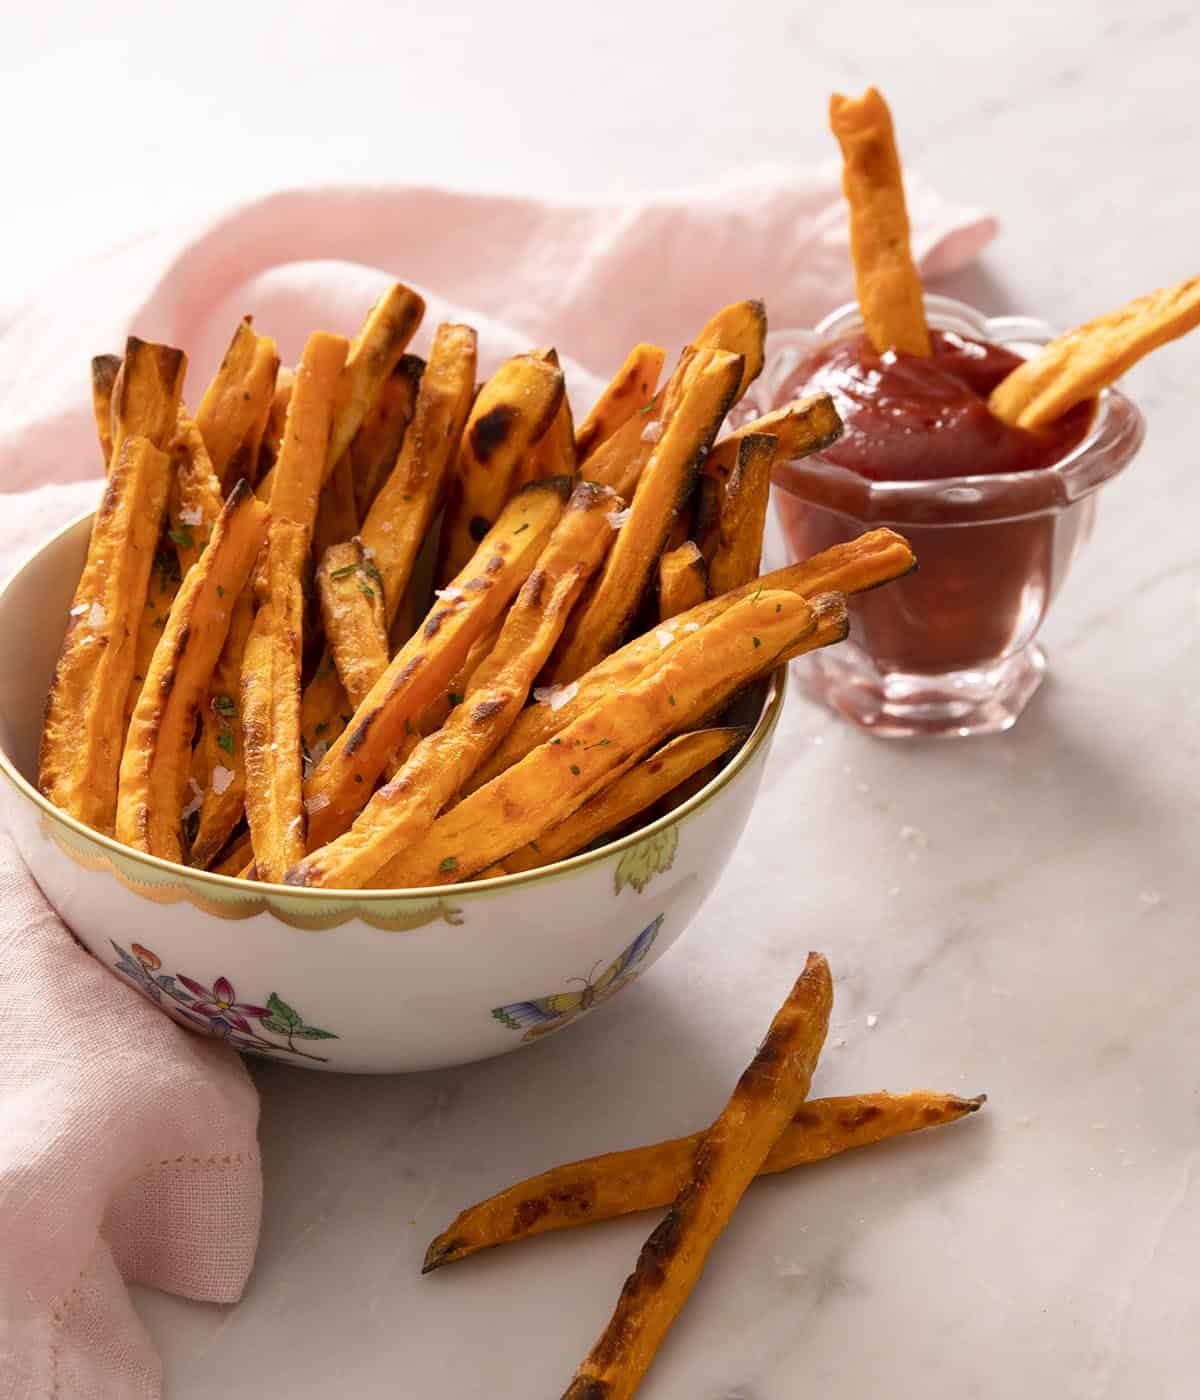 A porcelain bowl of sweet potato fries.